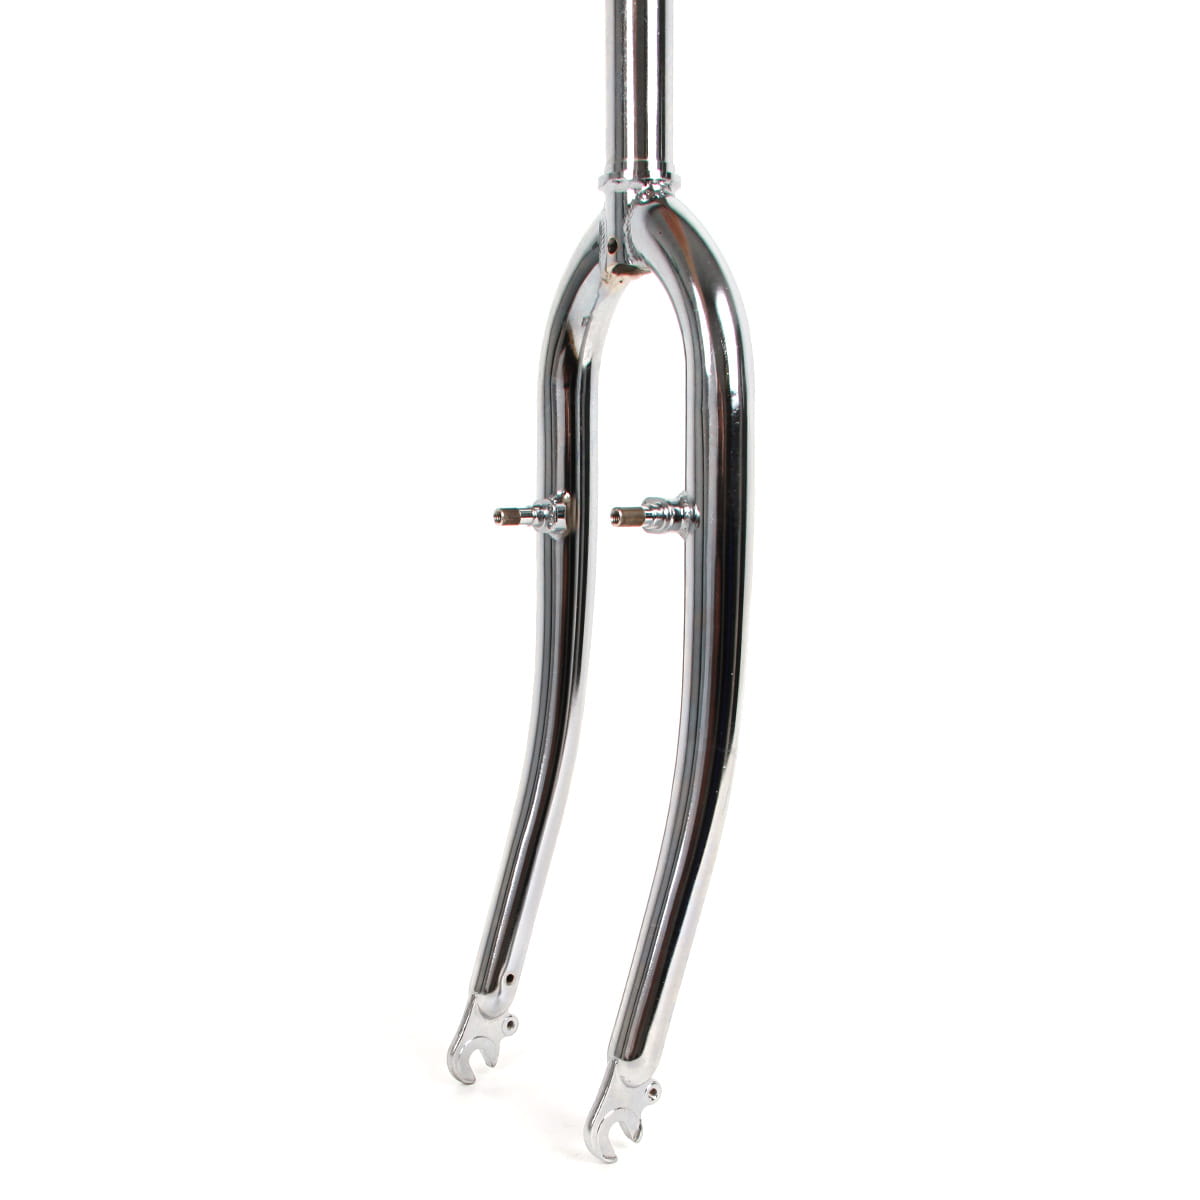 1 inch threaded suspension fork 26